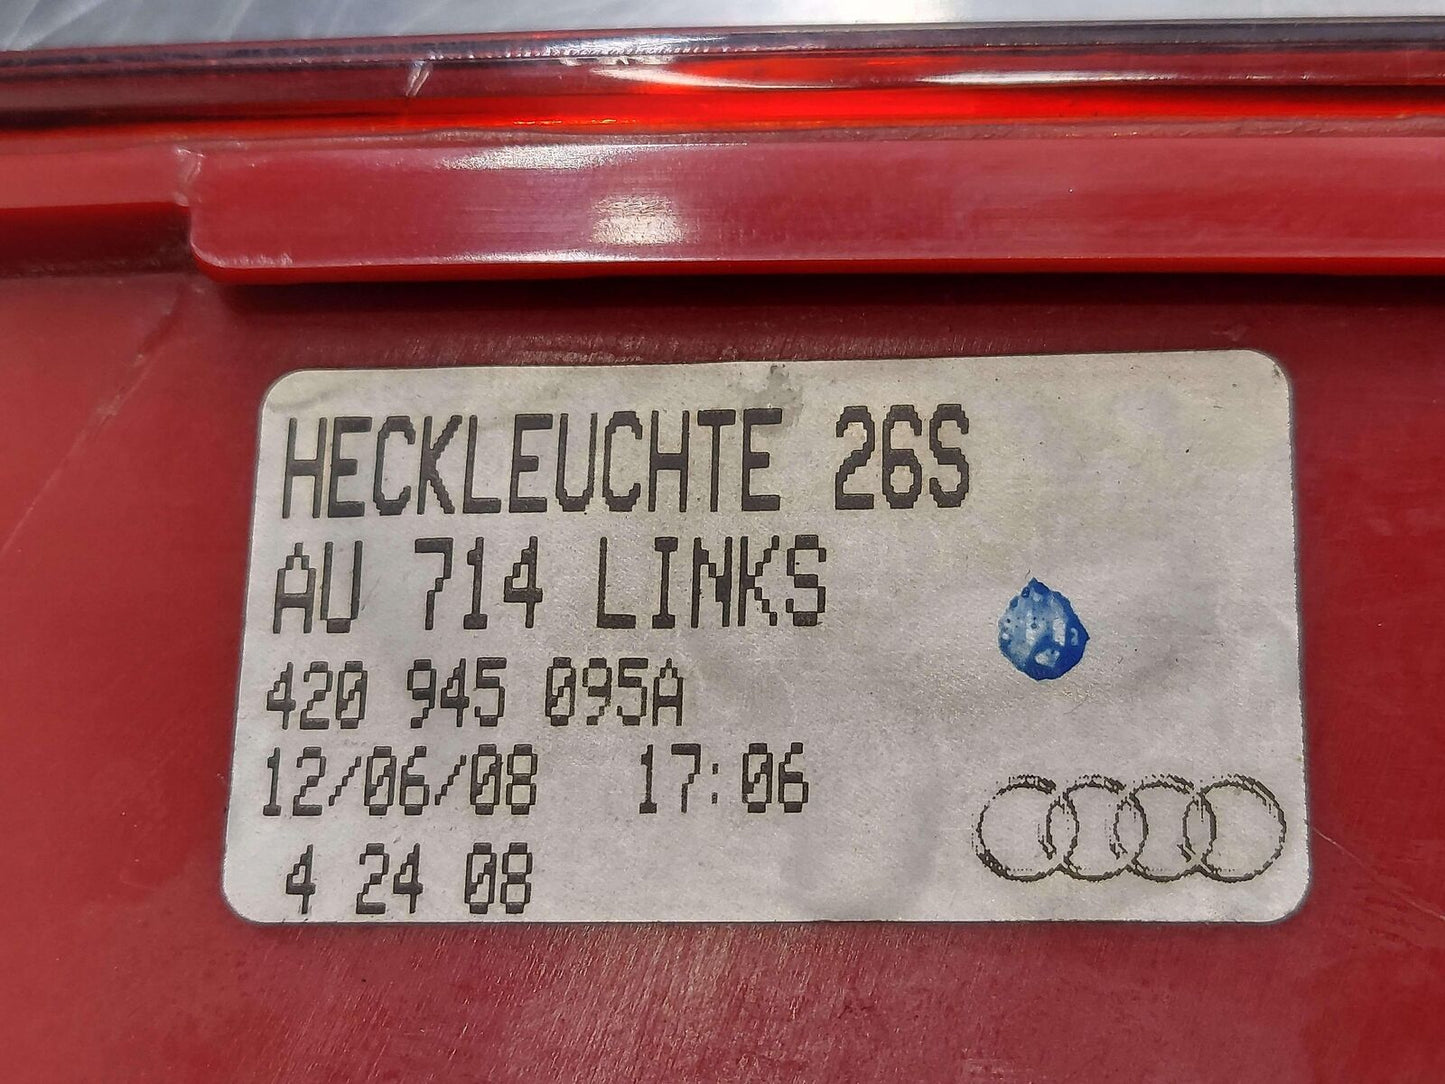 08-13 Audi R8 LH Left Tail Light Lamp 420945095A 54K KMS *Scratch*